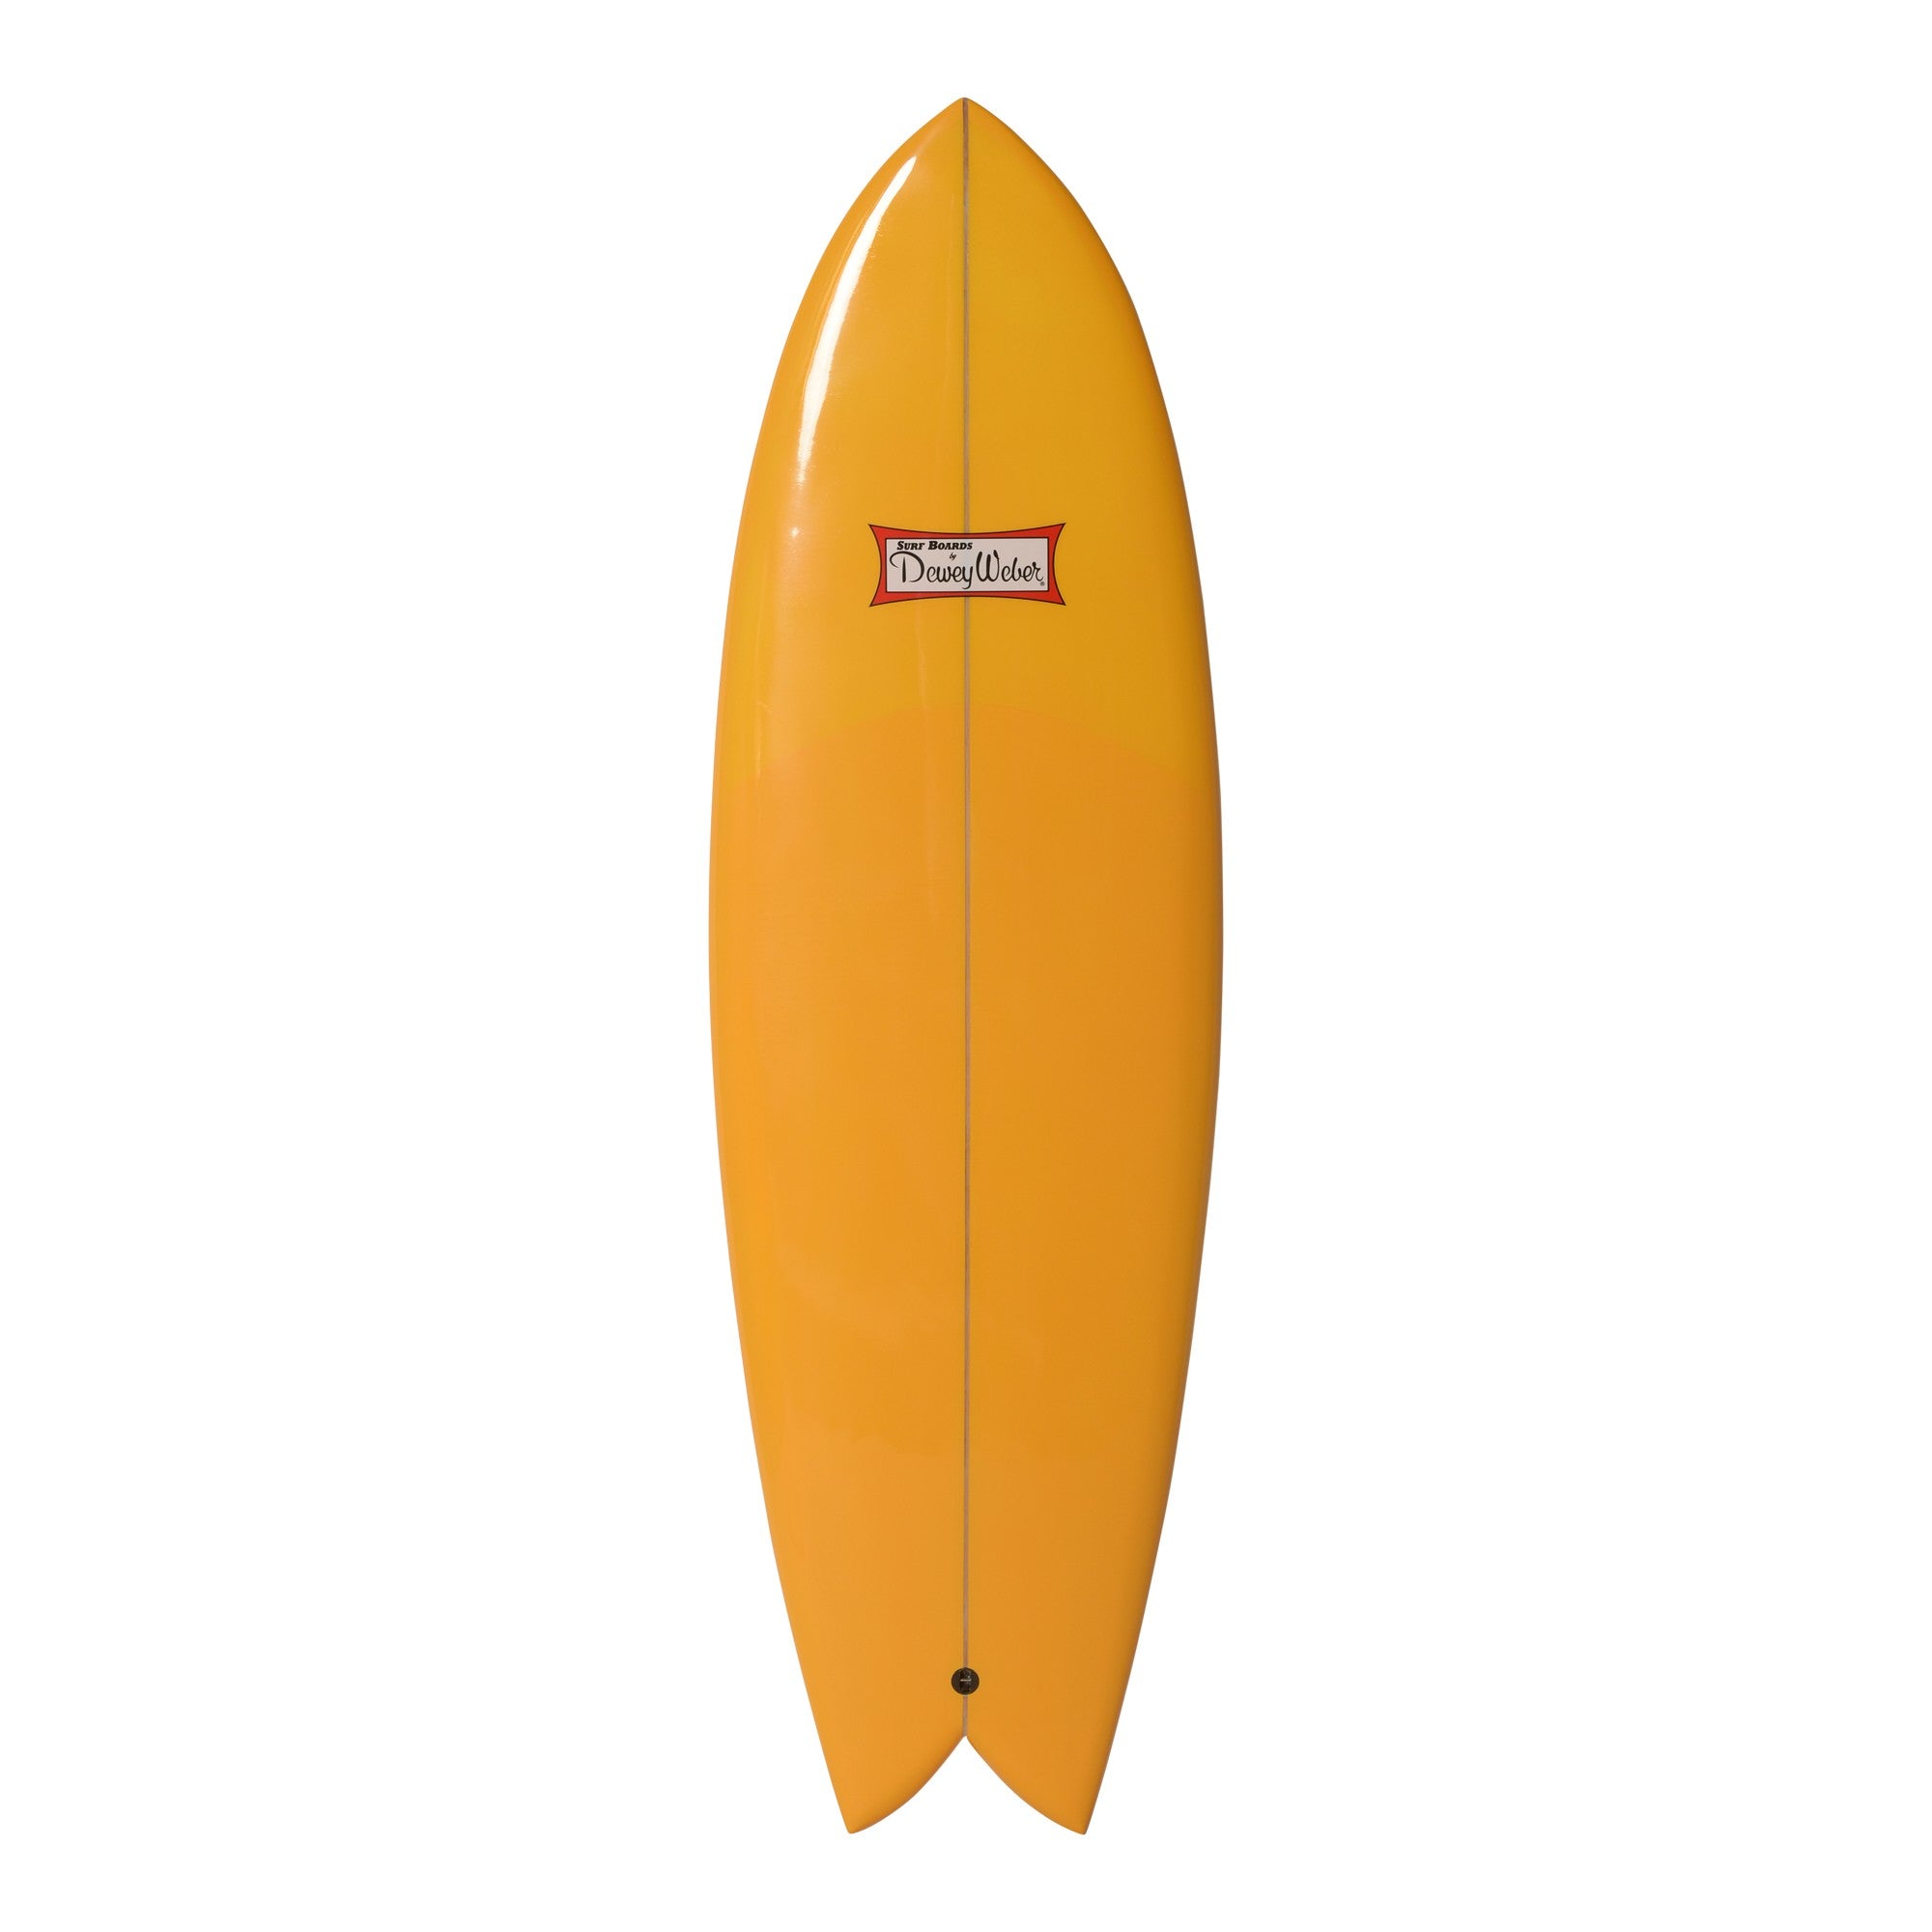 WEBER SURFBOARDS - Swish 5'6 - Orange